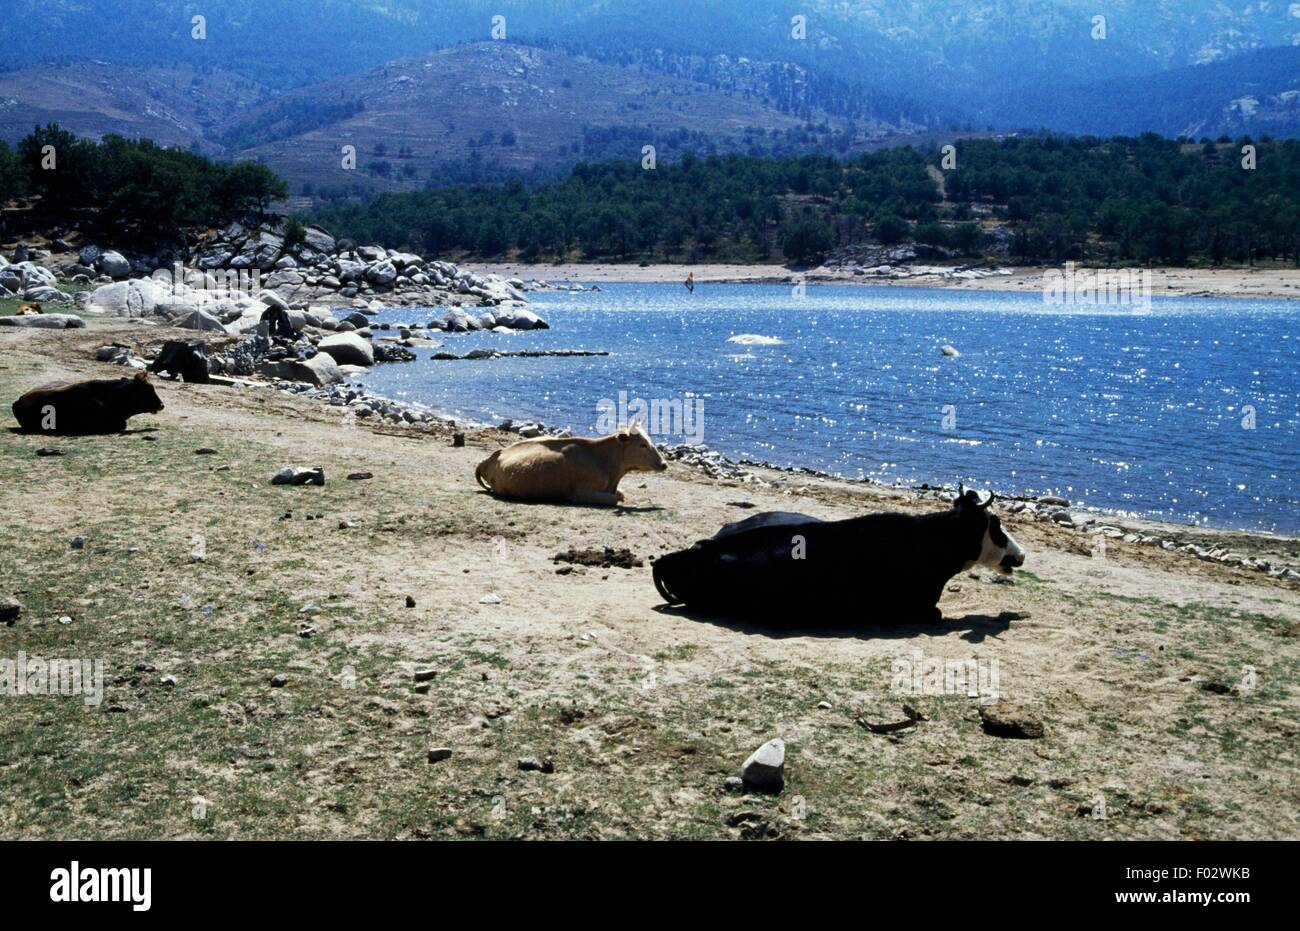 Lake Calacuccia, Regional Natural Park of Corsica (Parc Naturel Regional de Corse), Corsica, France. Stock Photo